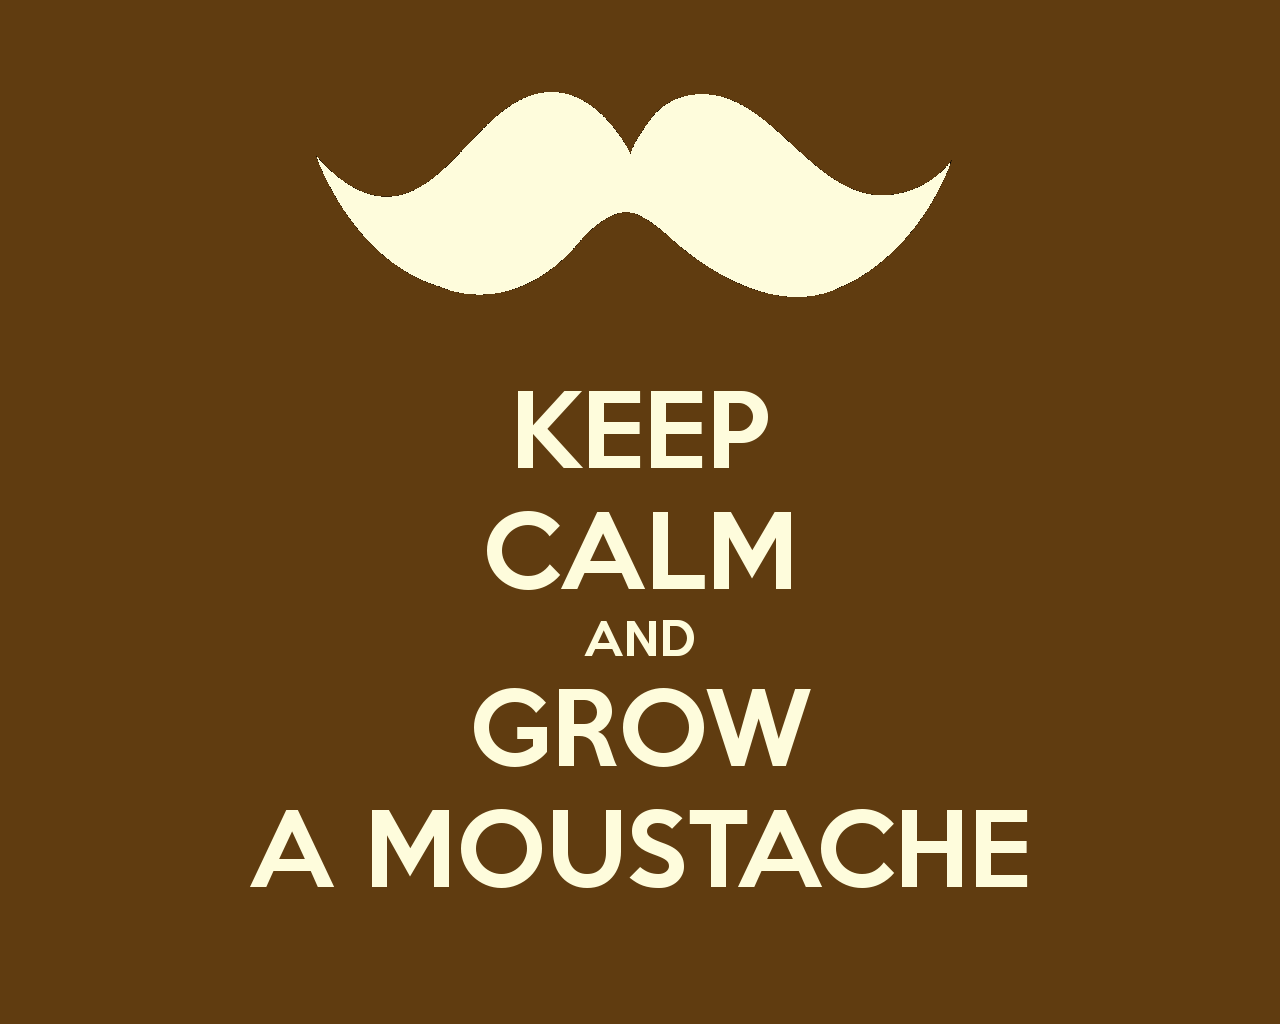 keep calm quotes. Keep Calm and Grow a Moustache desktop wallpaper